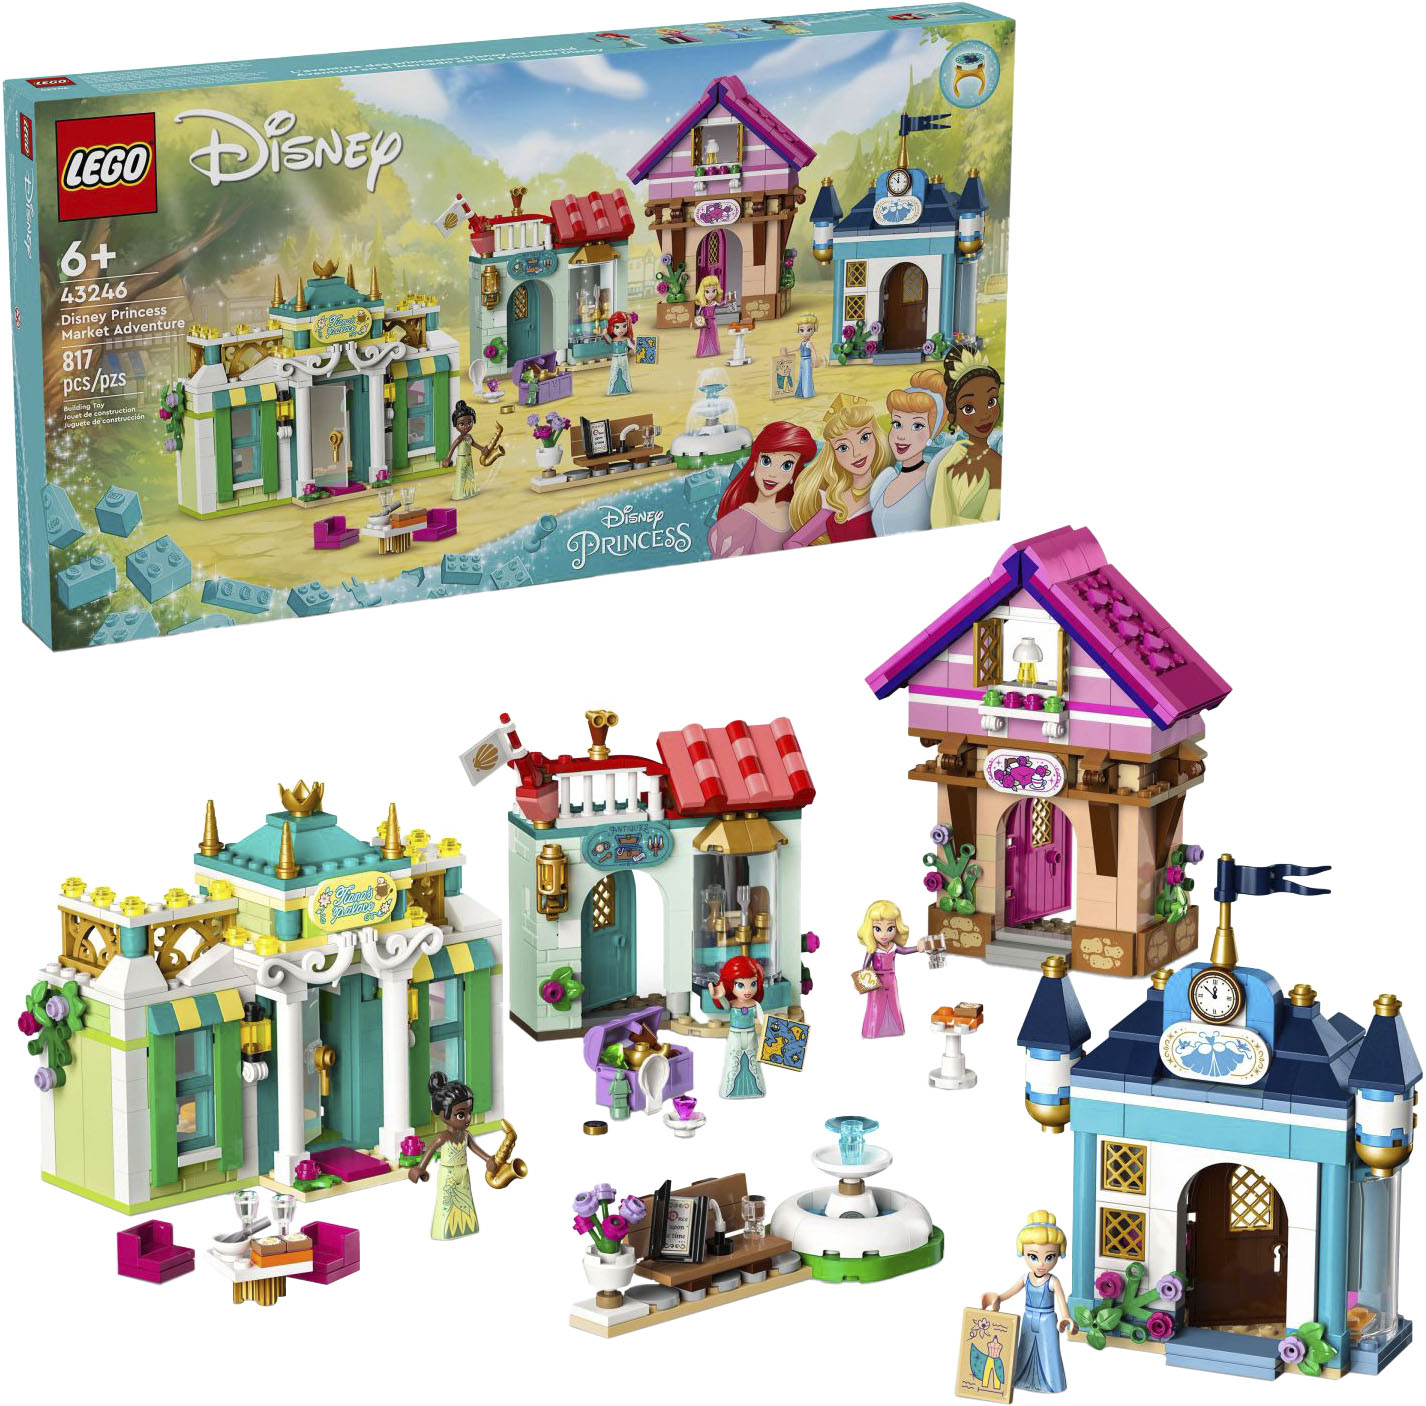 LEGO Disney Princess: Disney Princess Market Adventure Toy Set